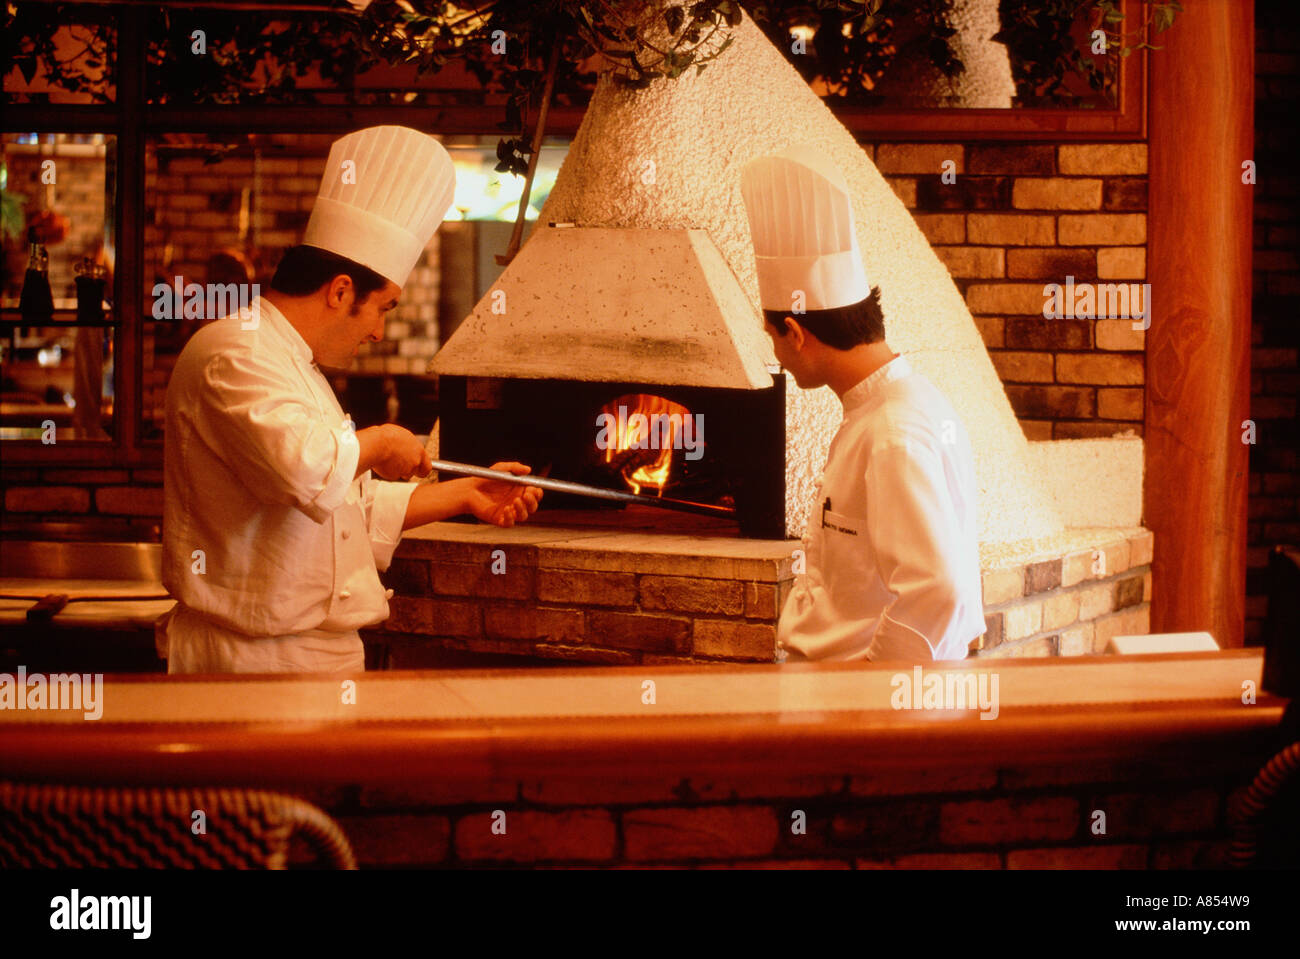 Two men hotel chefs in whites tending pizza oven in restaurant. Stock Photo